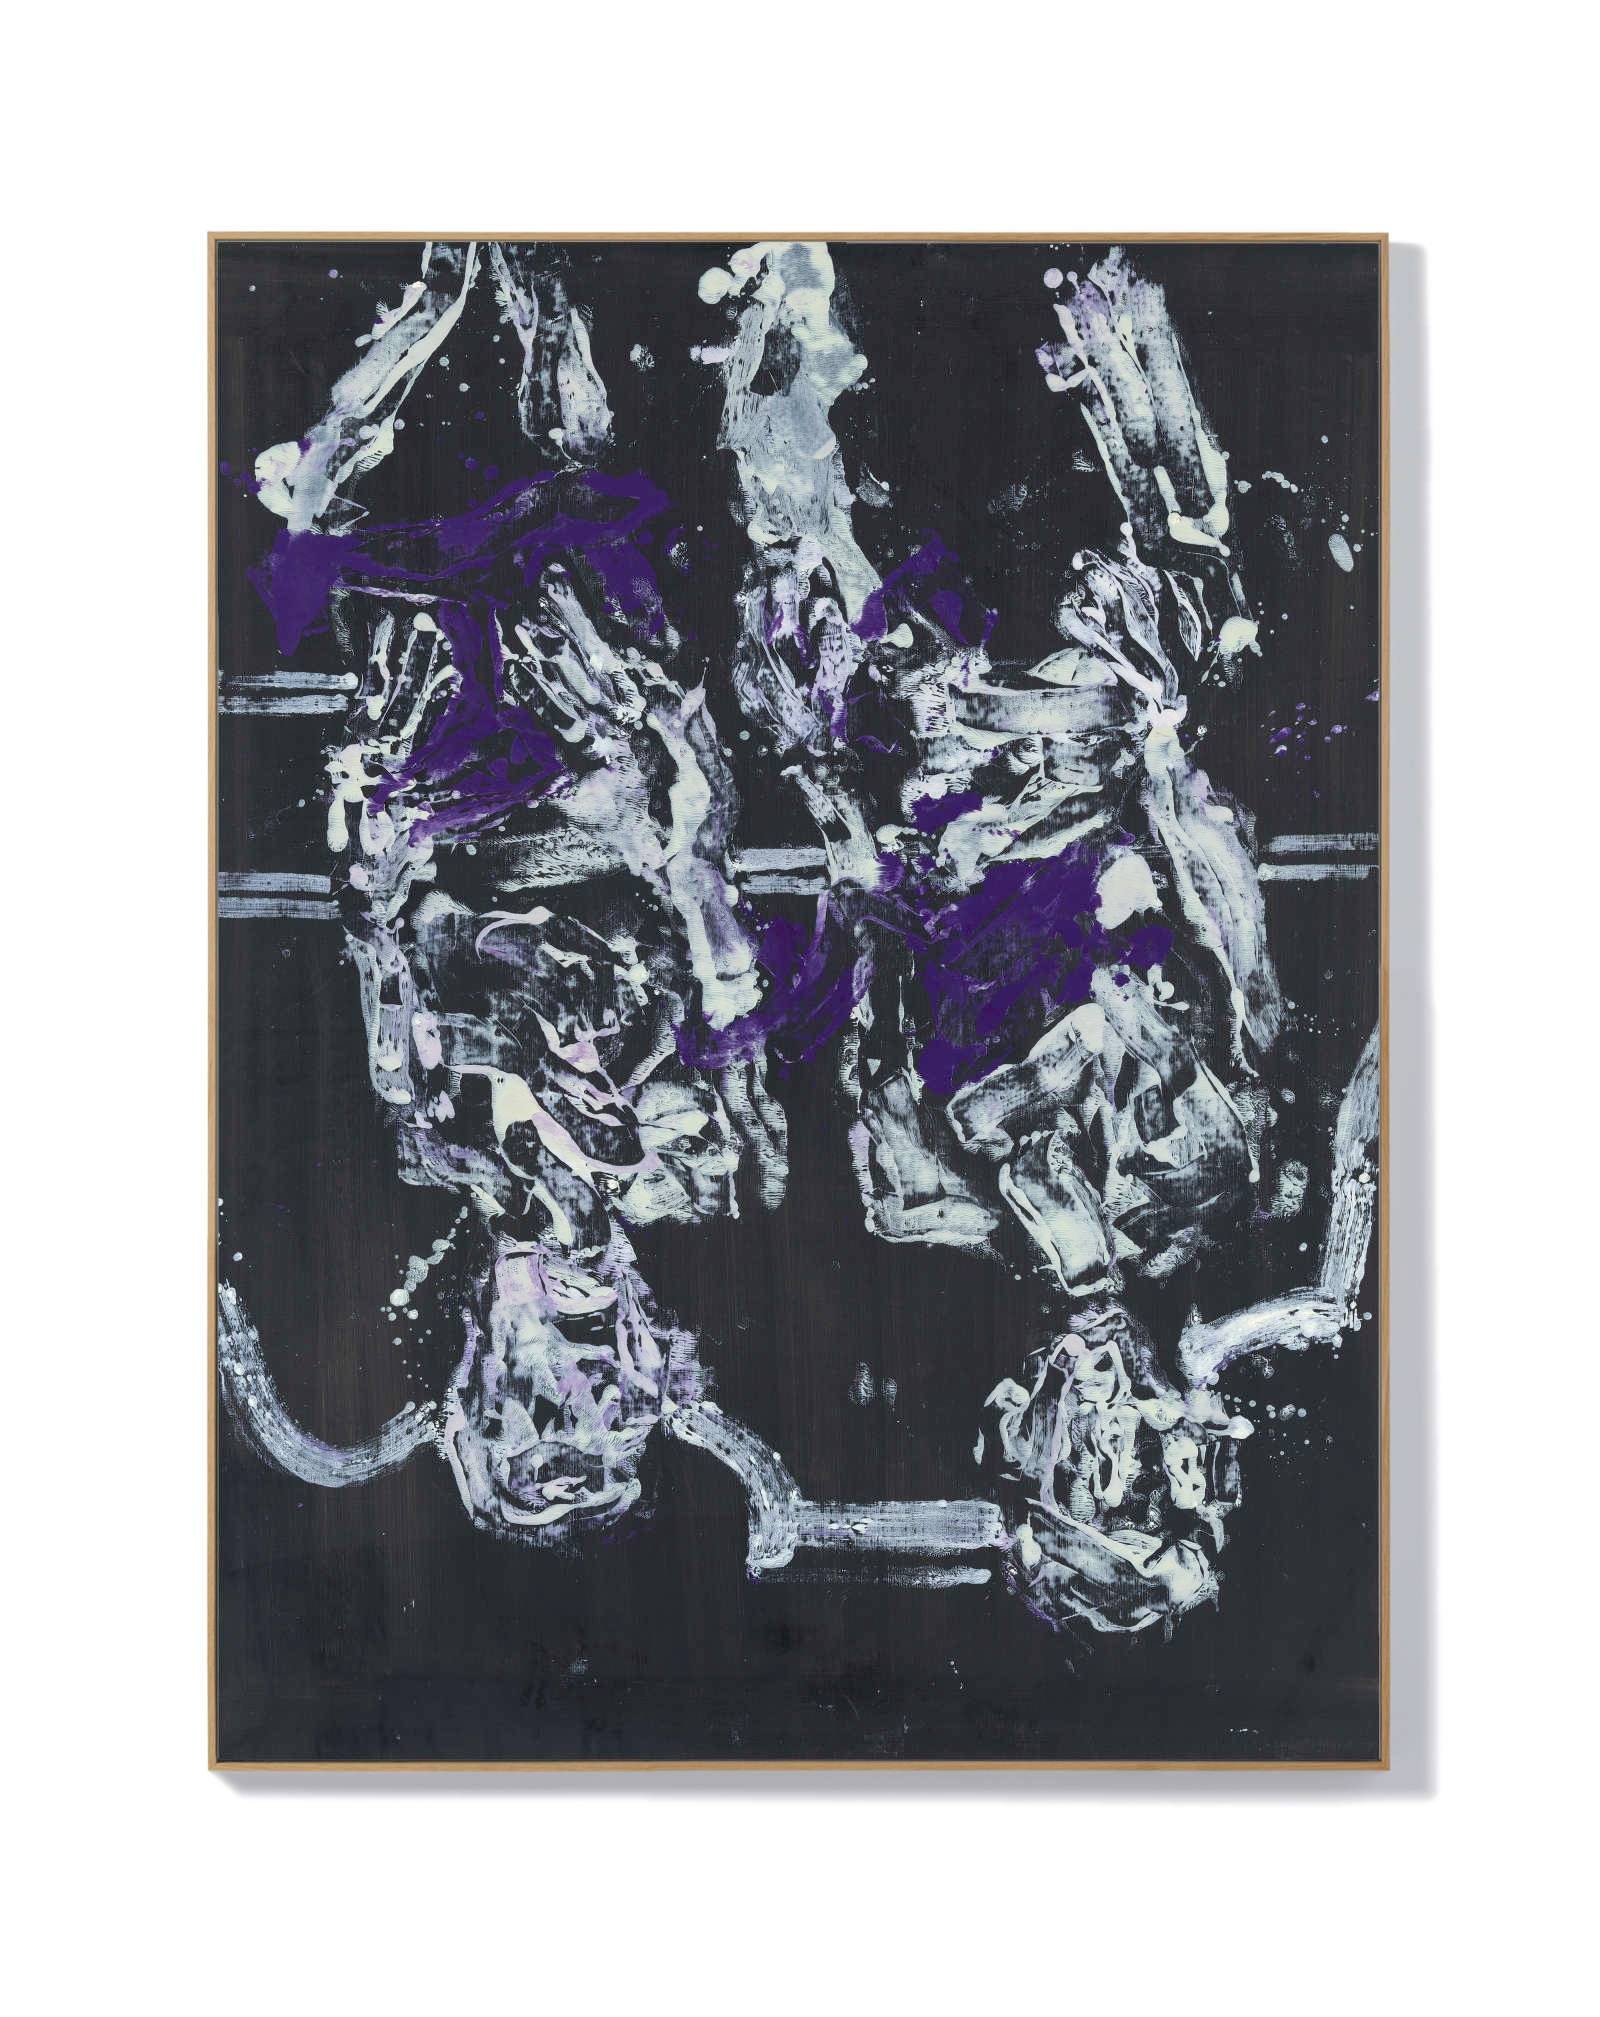 Georg Baselitz, “X-ray lila” (2020). 1 200 000 €. Courtesy Thaddaeus Ropac Gallery